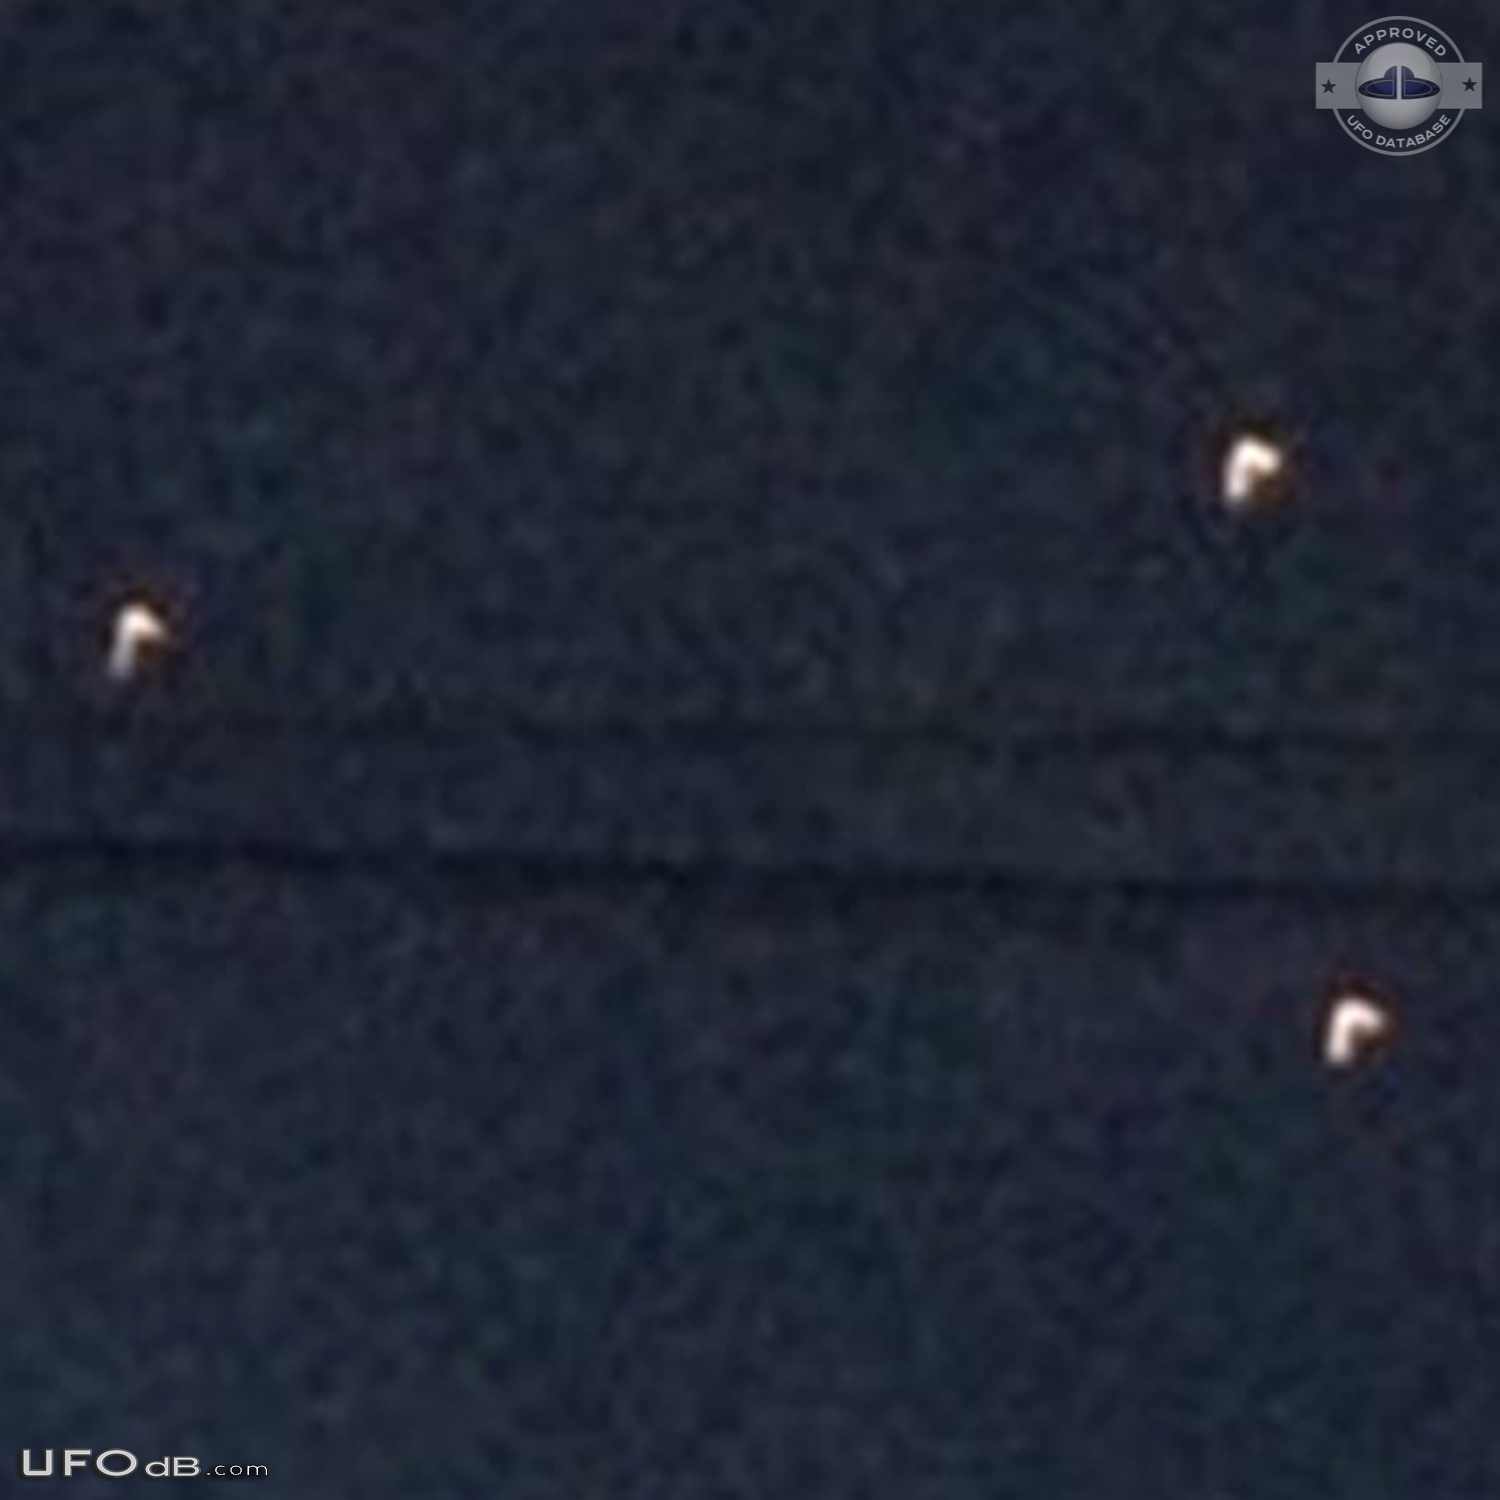 Triangle formation Orange UFOs over Grover beach, California USA 2014 UFO Picture #652-5